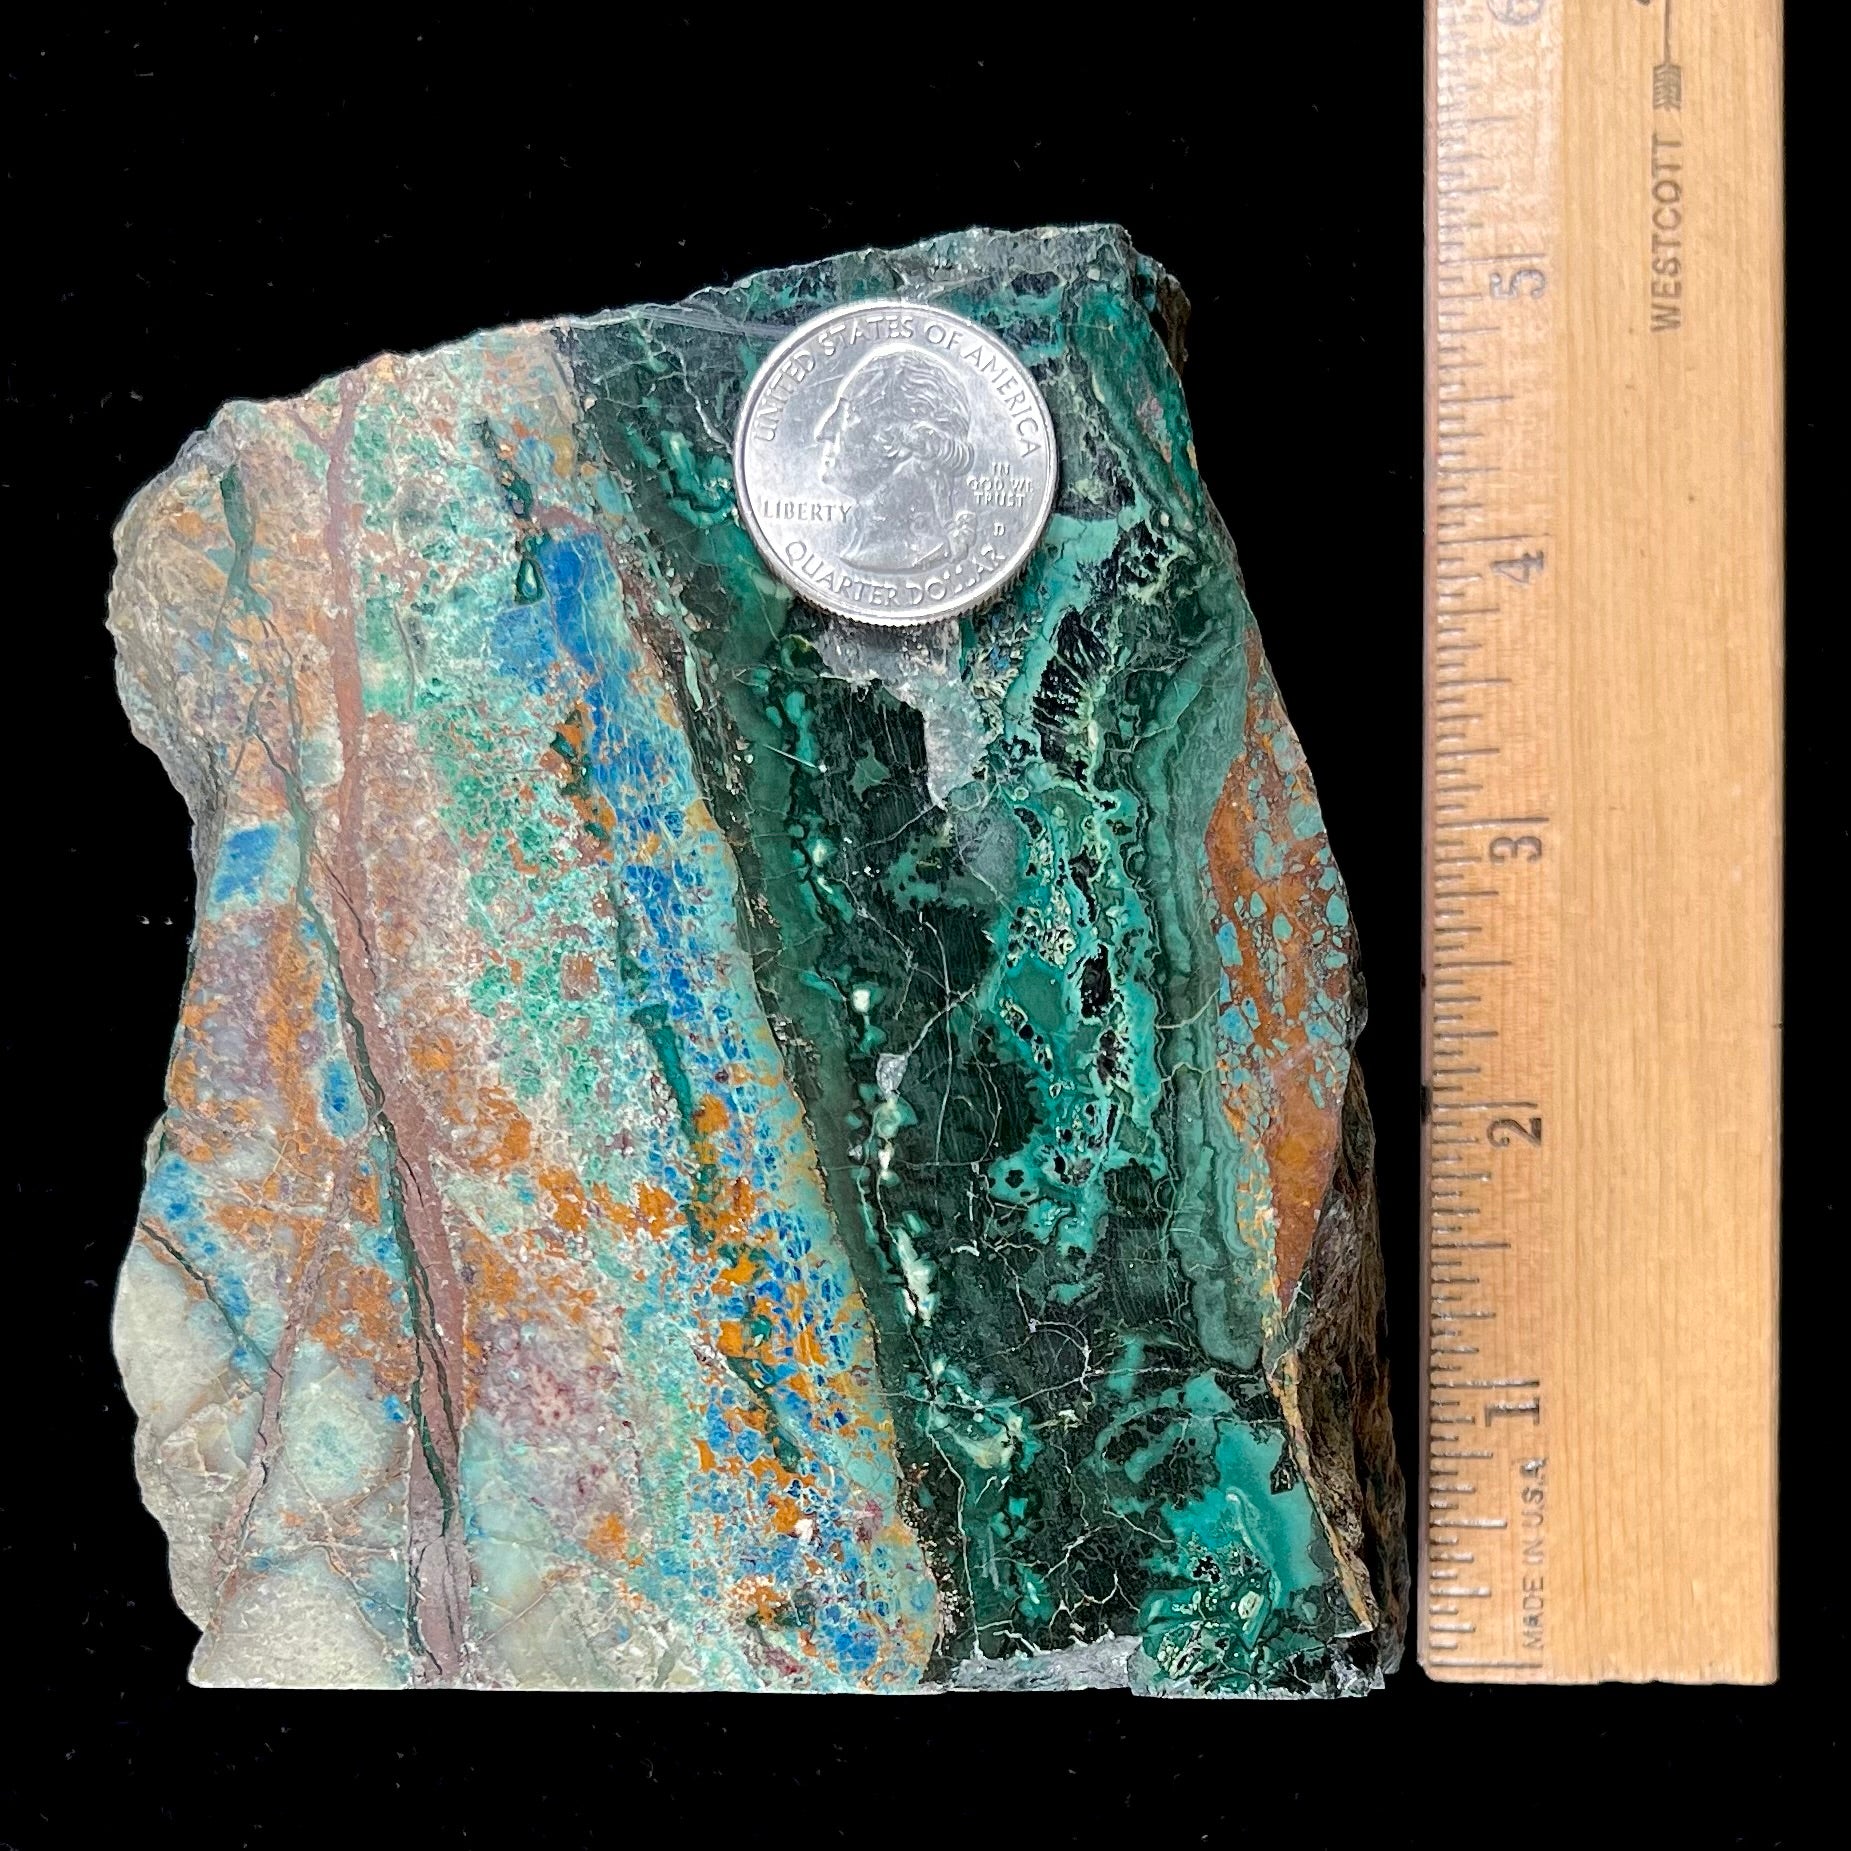 A polished Eilat stone specimen from King Solomon's Mine, Israel.